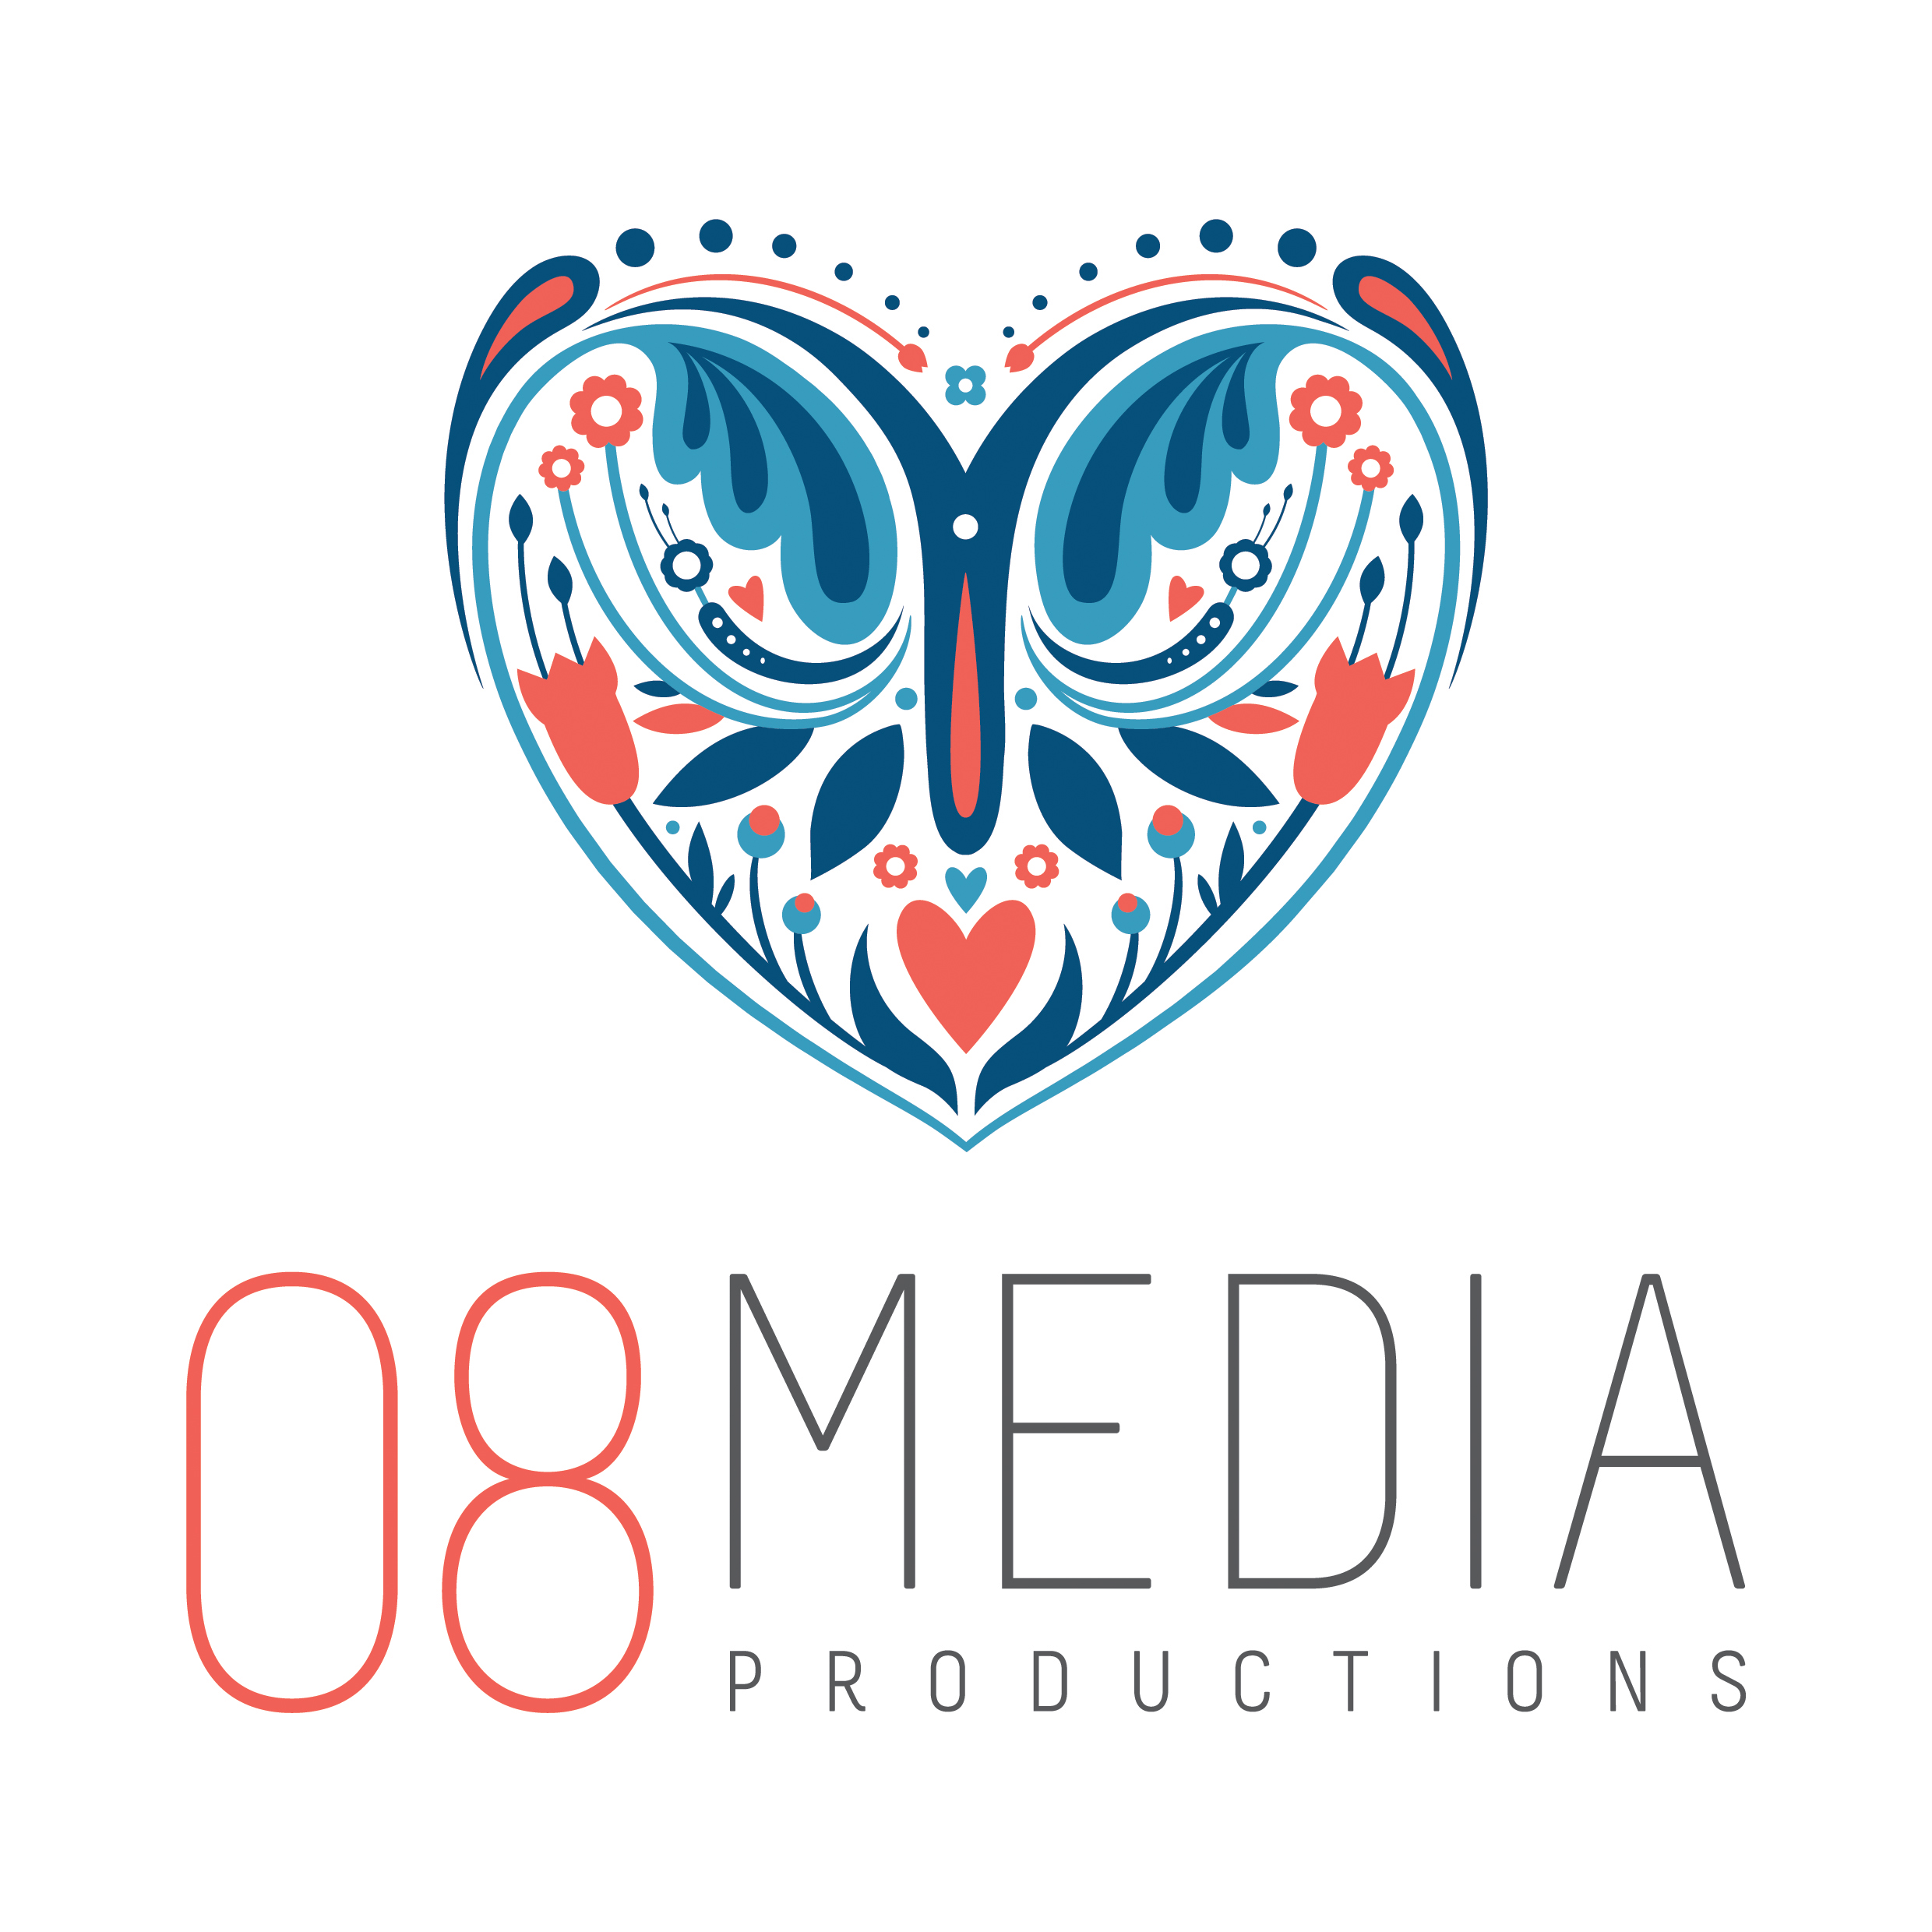 08 Media Productions